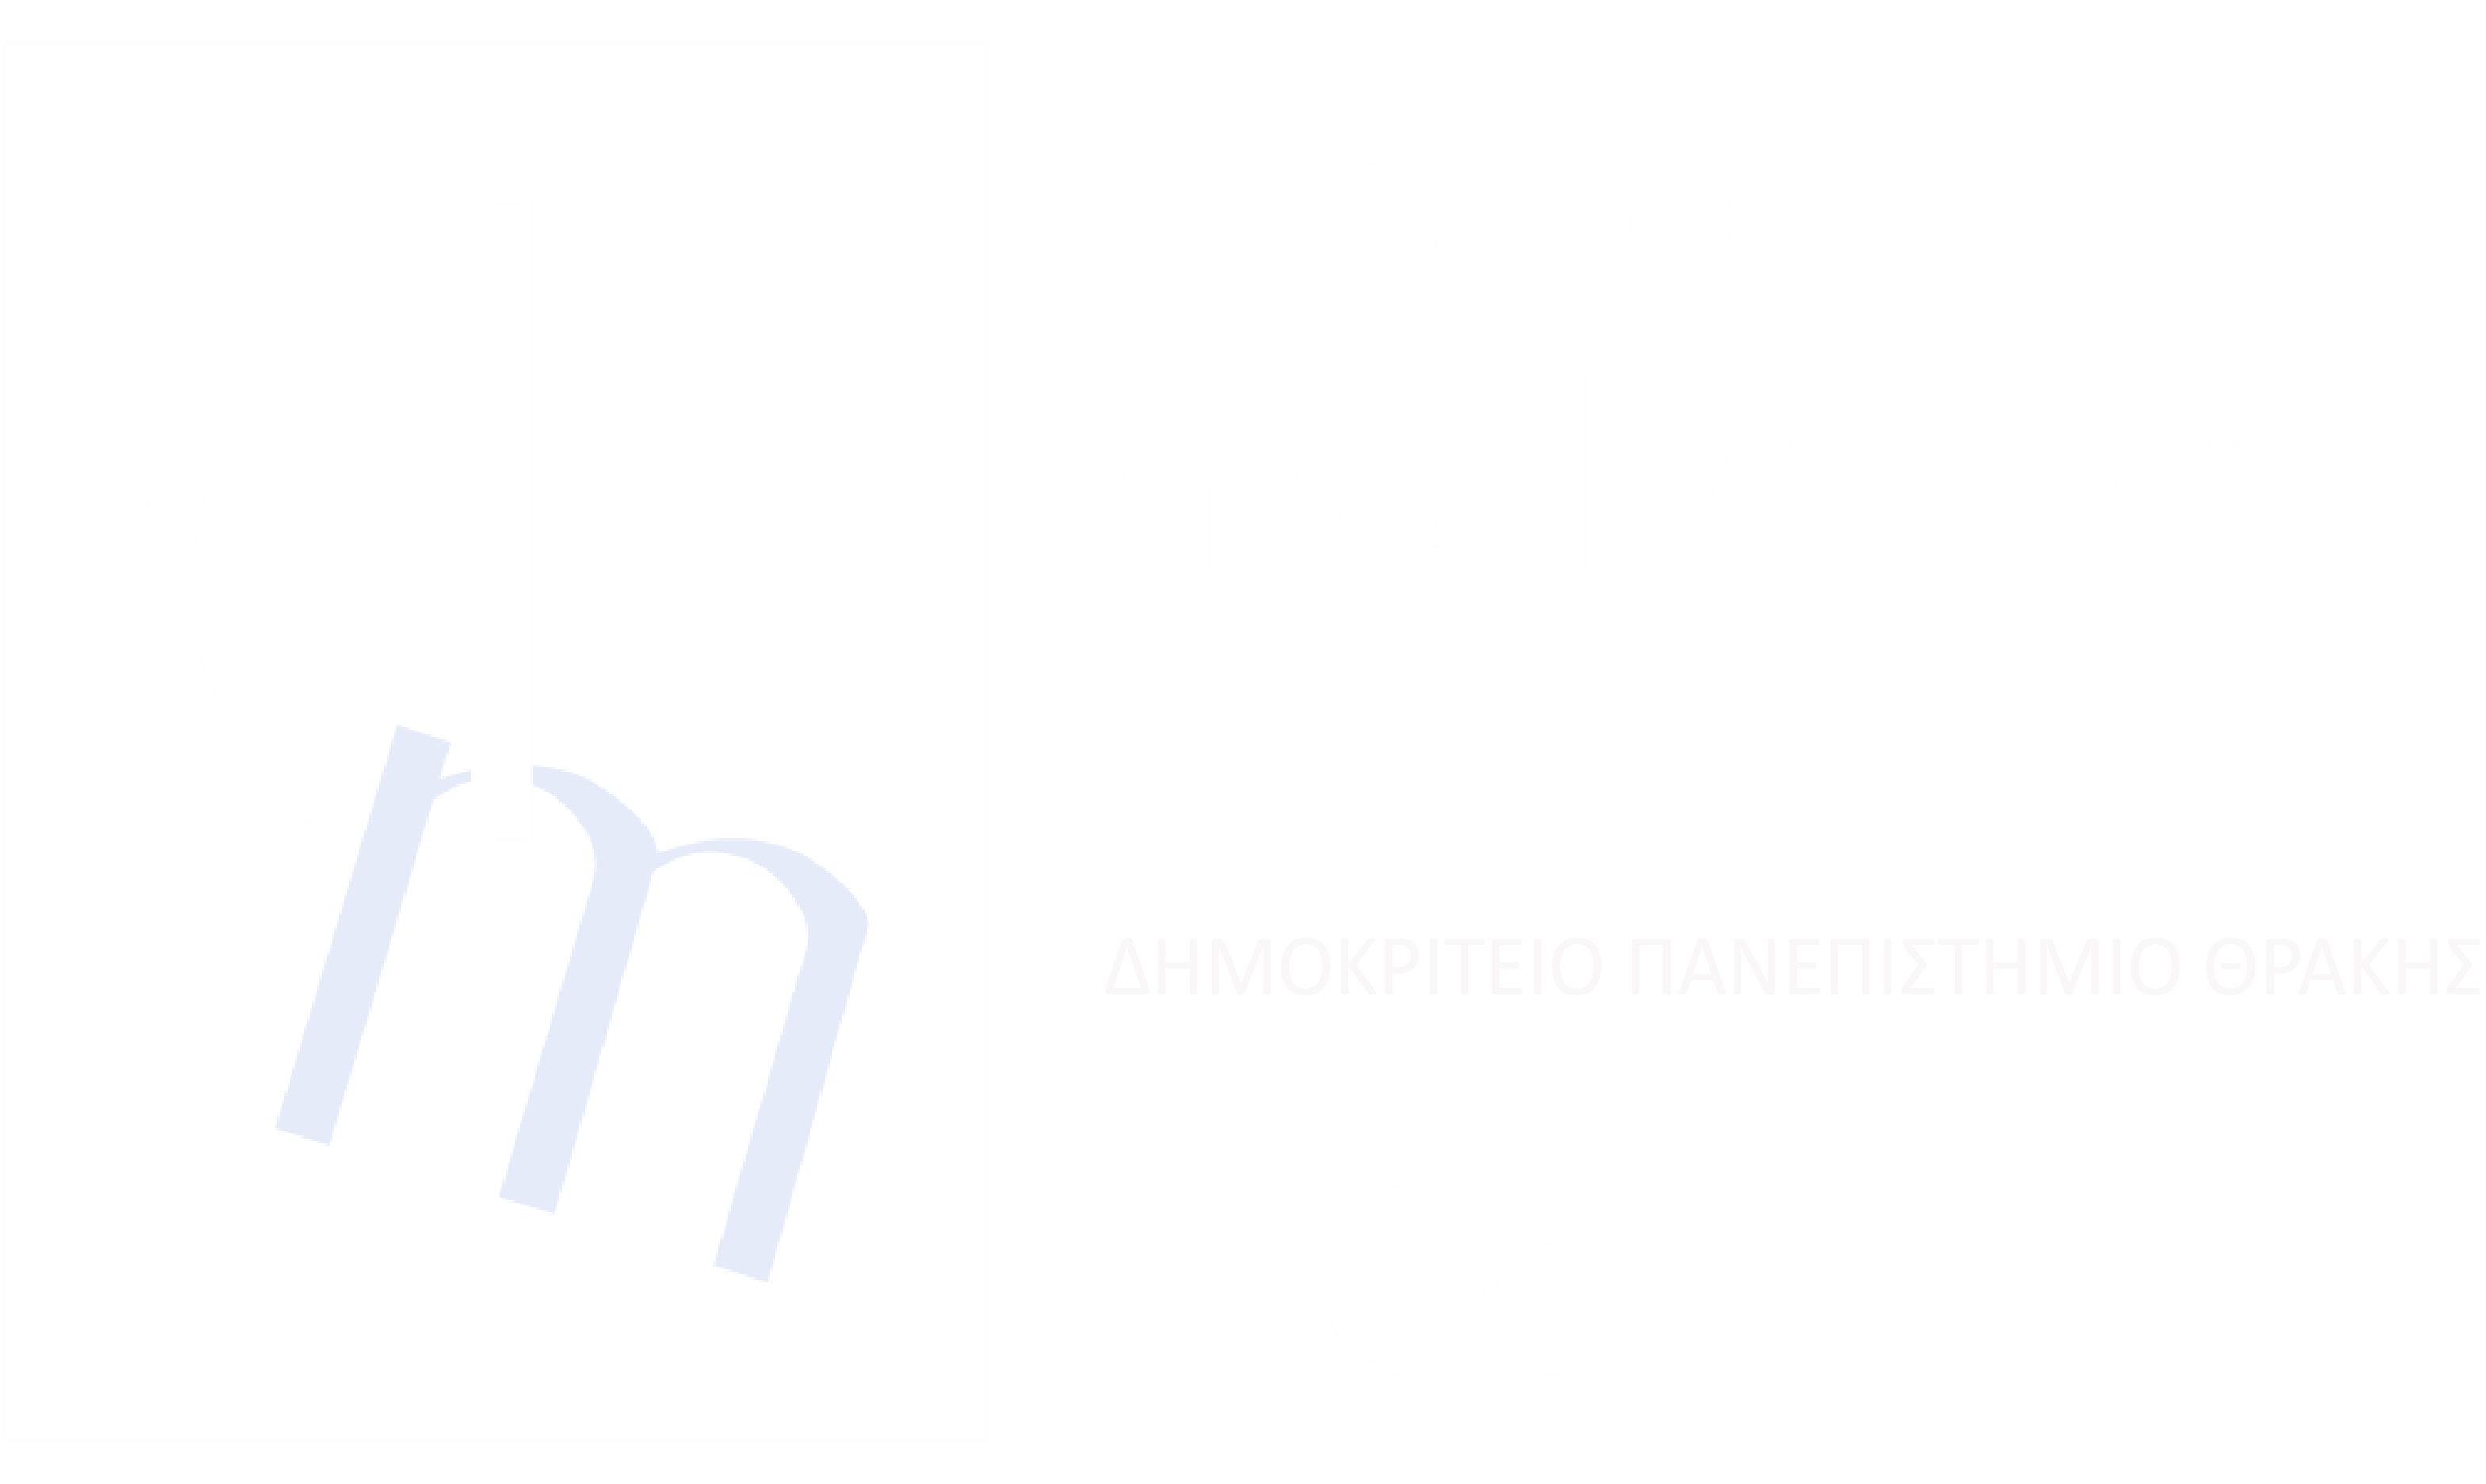 Digital Marketing MSc